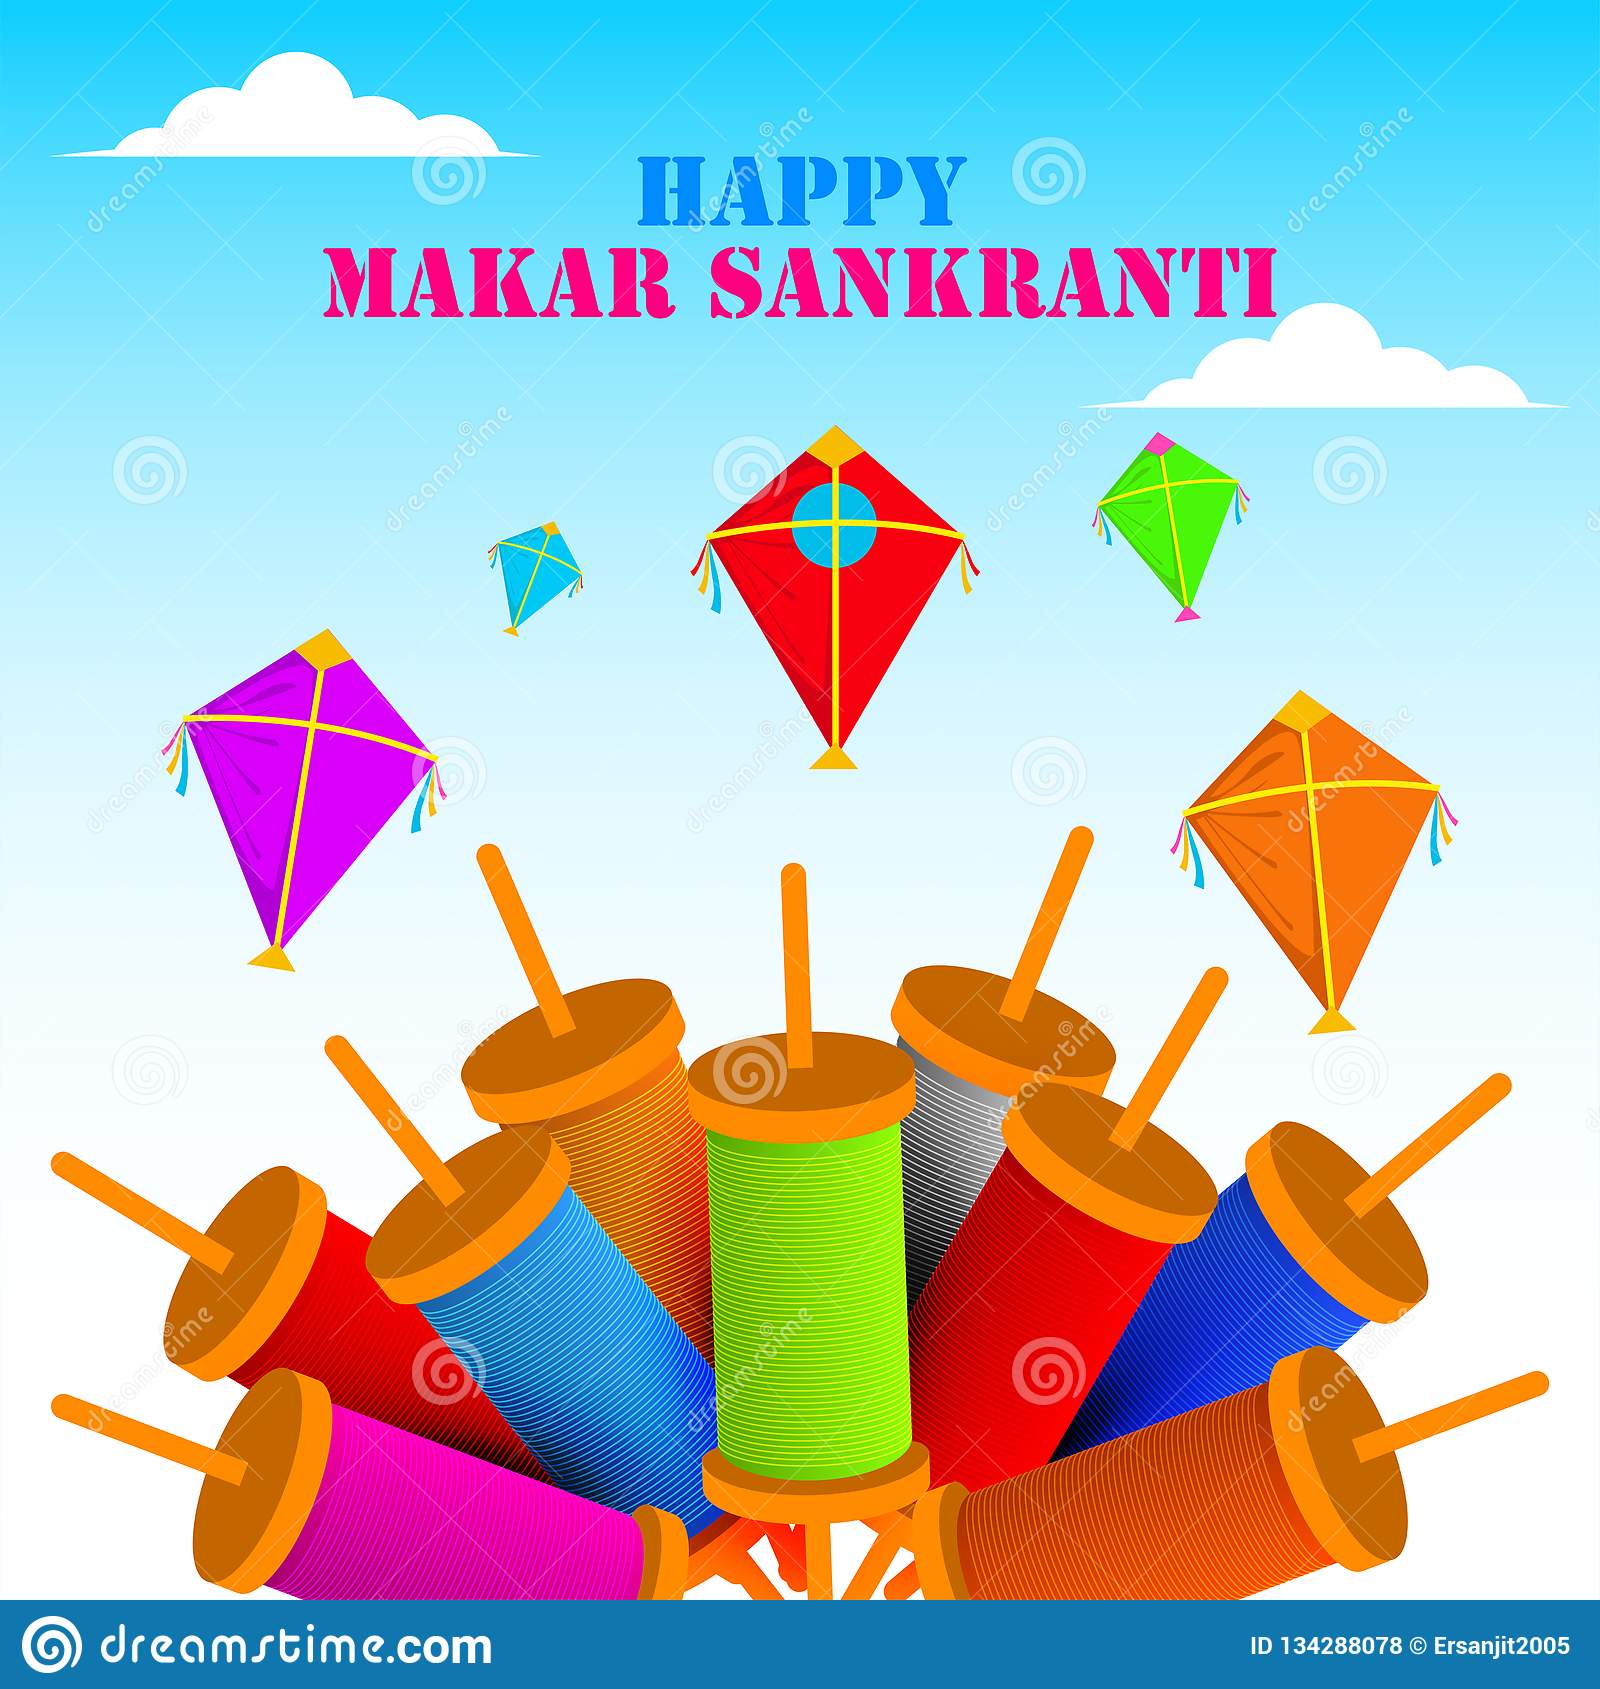 Makar sankranti wallpaper with colorful kite for festival of india stock illustration